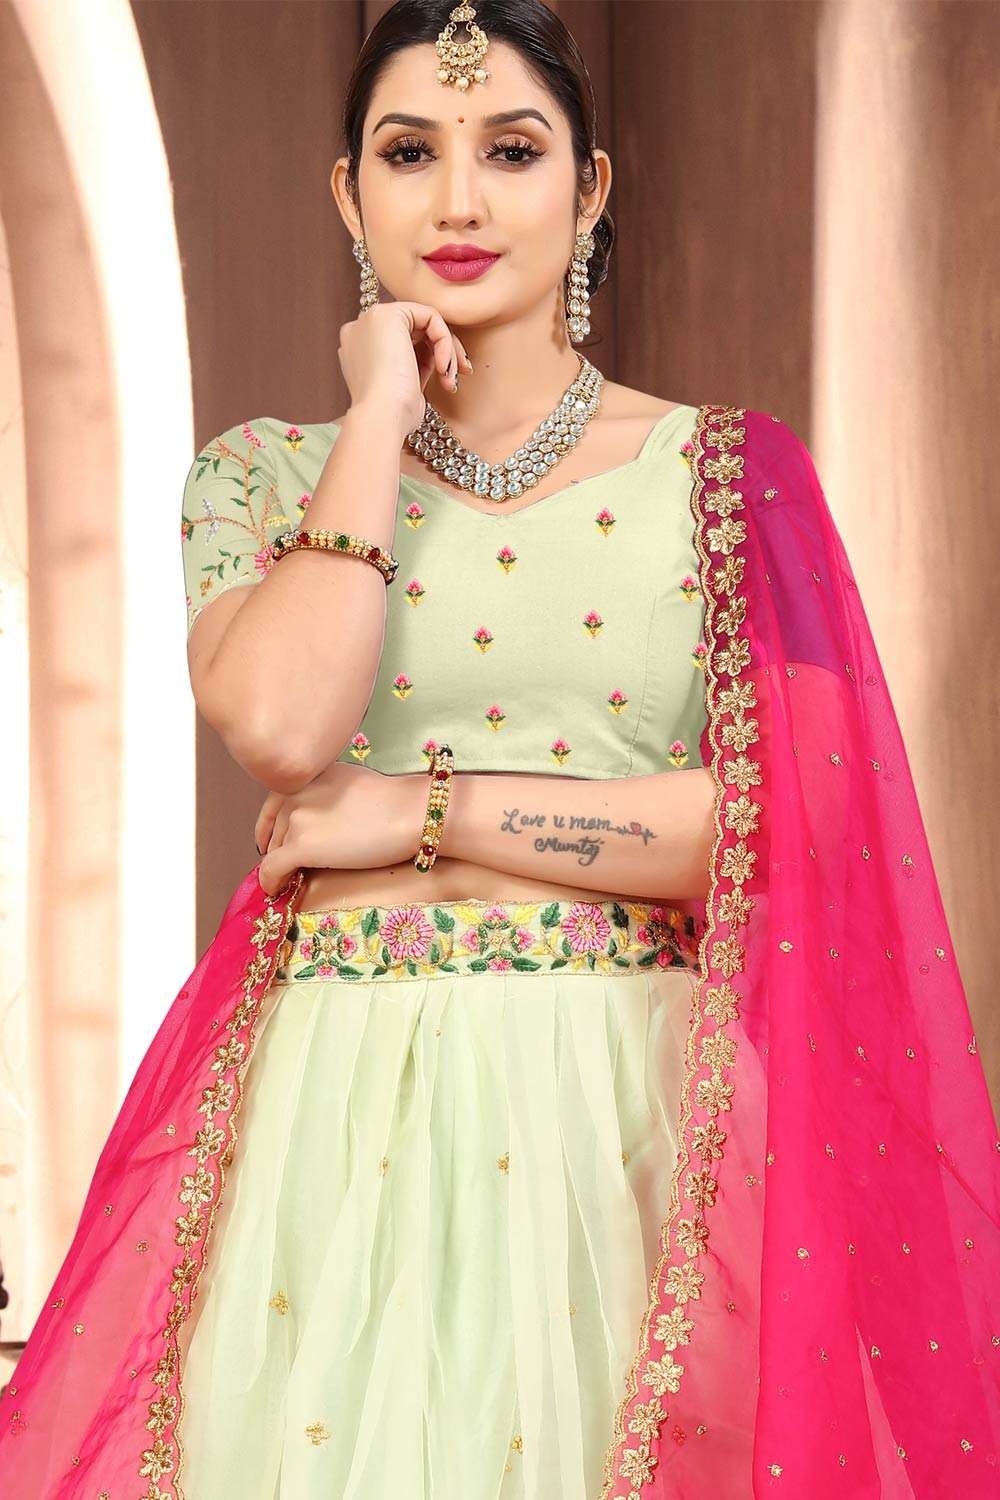 Malaika Arora Khan: Malaika Arora in a gorgeous cream and gold Indian  bridal lengha looks absolutely stunning.